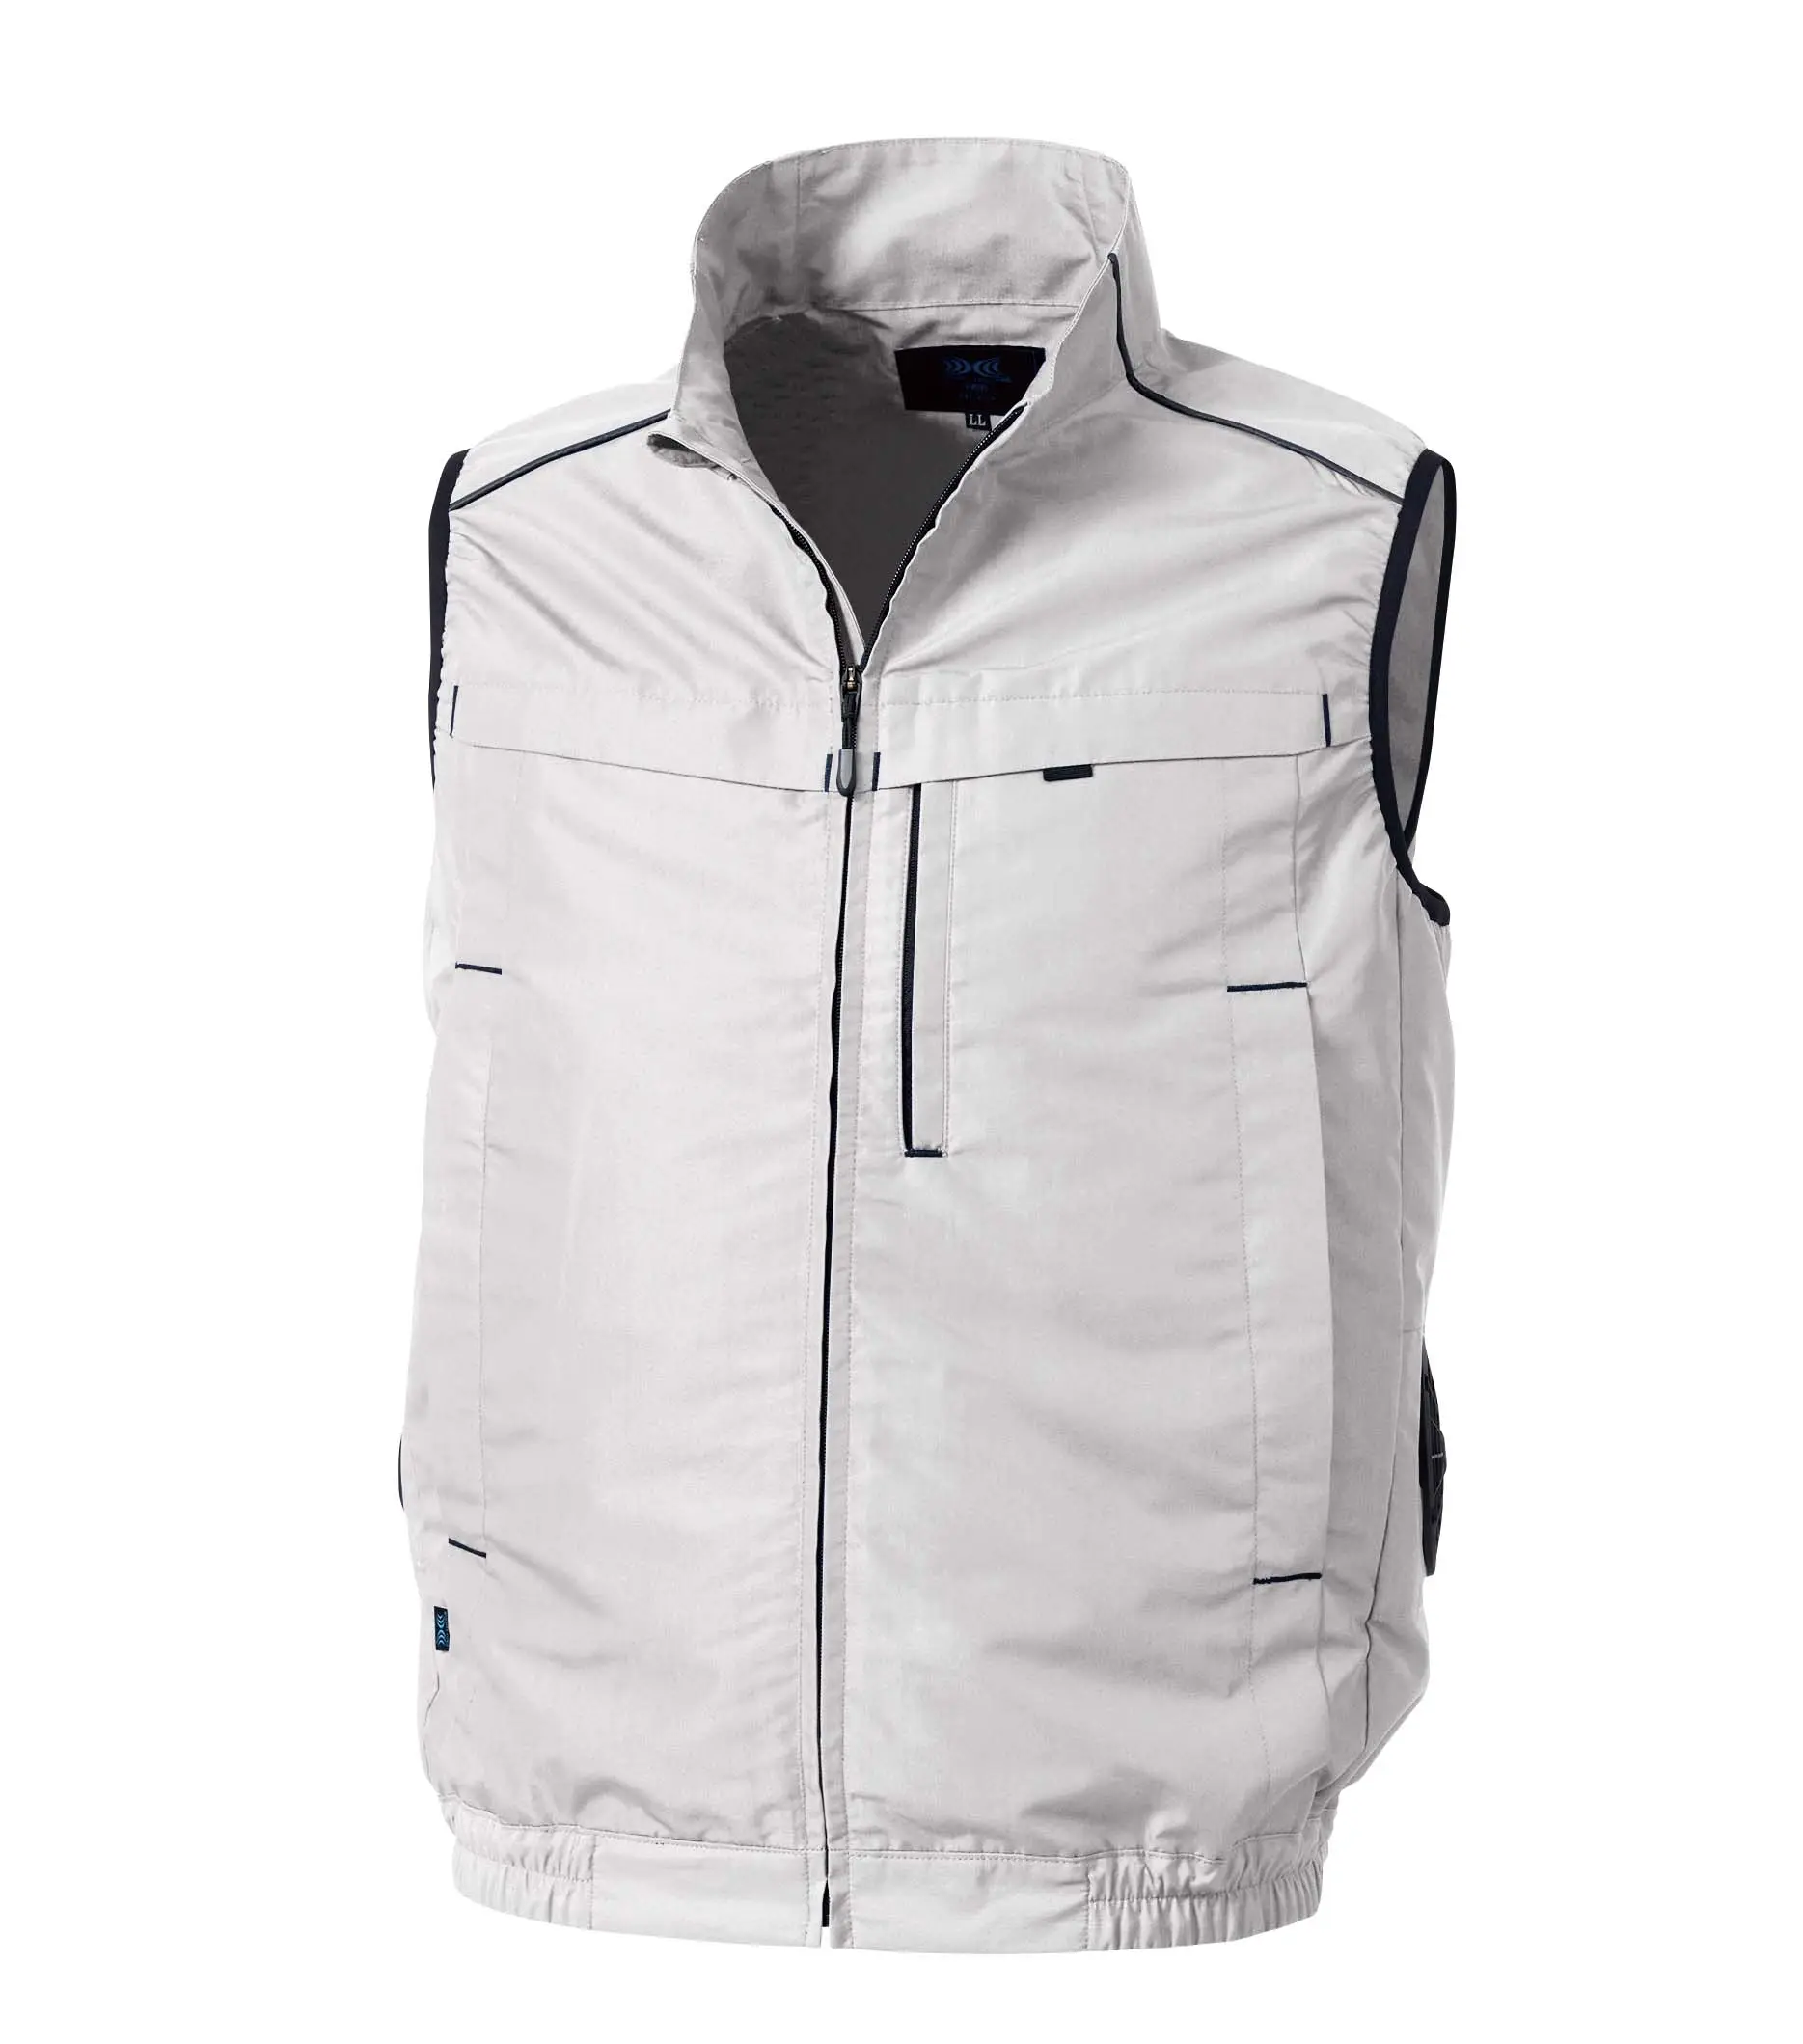 Cooling Jacket Cheap Wholesale Bulk Clothing Apparel Vest for Men